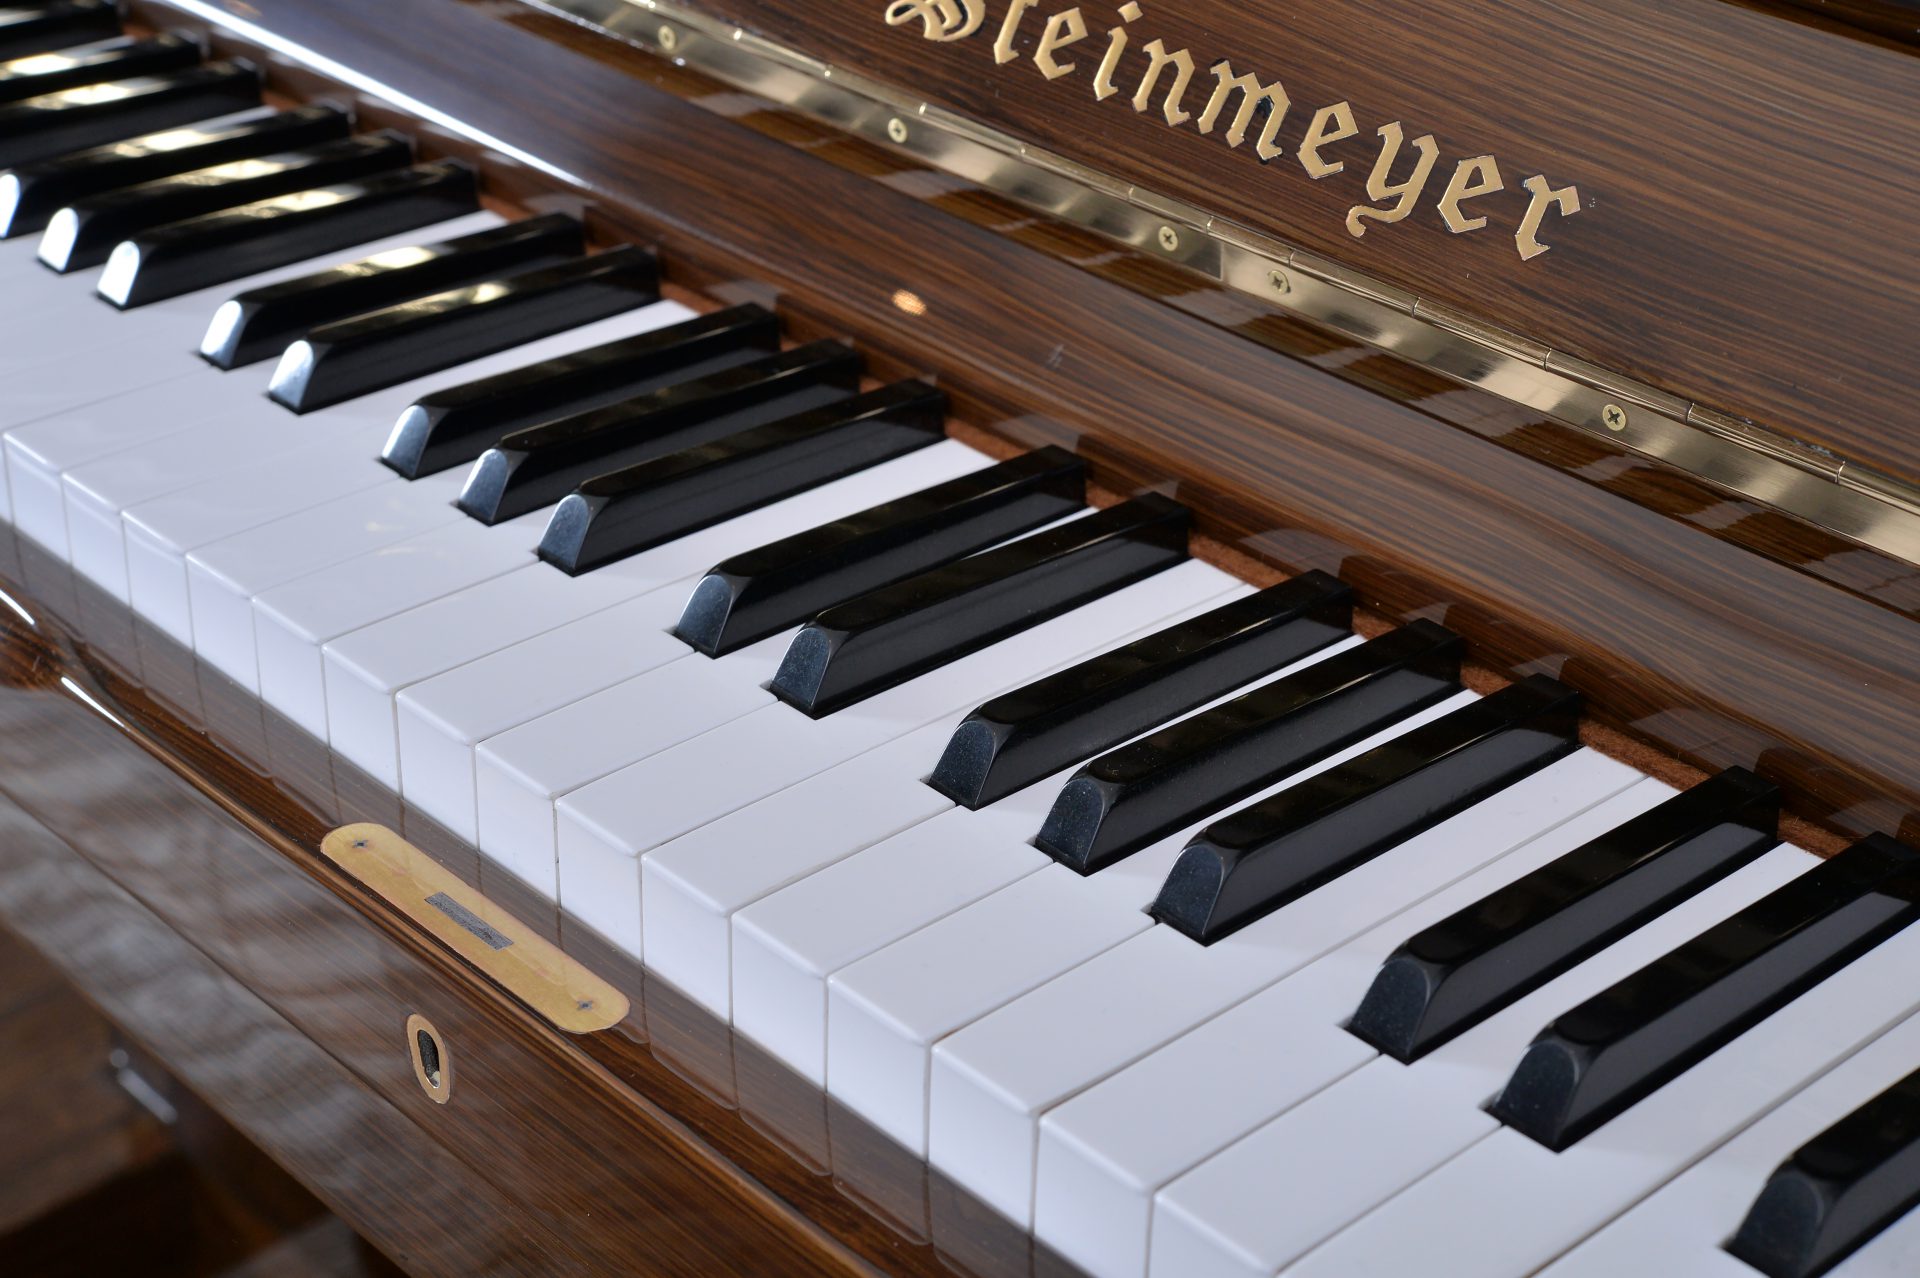 STEINMEYER | 白いピアノ専門 オギノピアノ工房